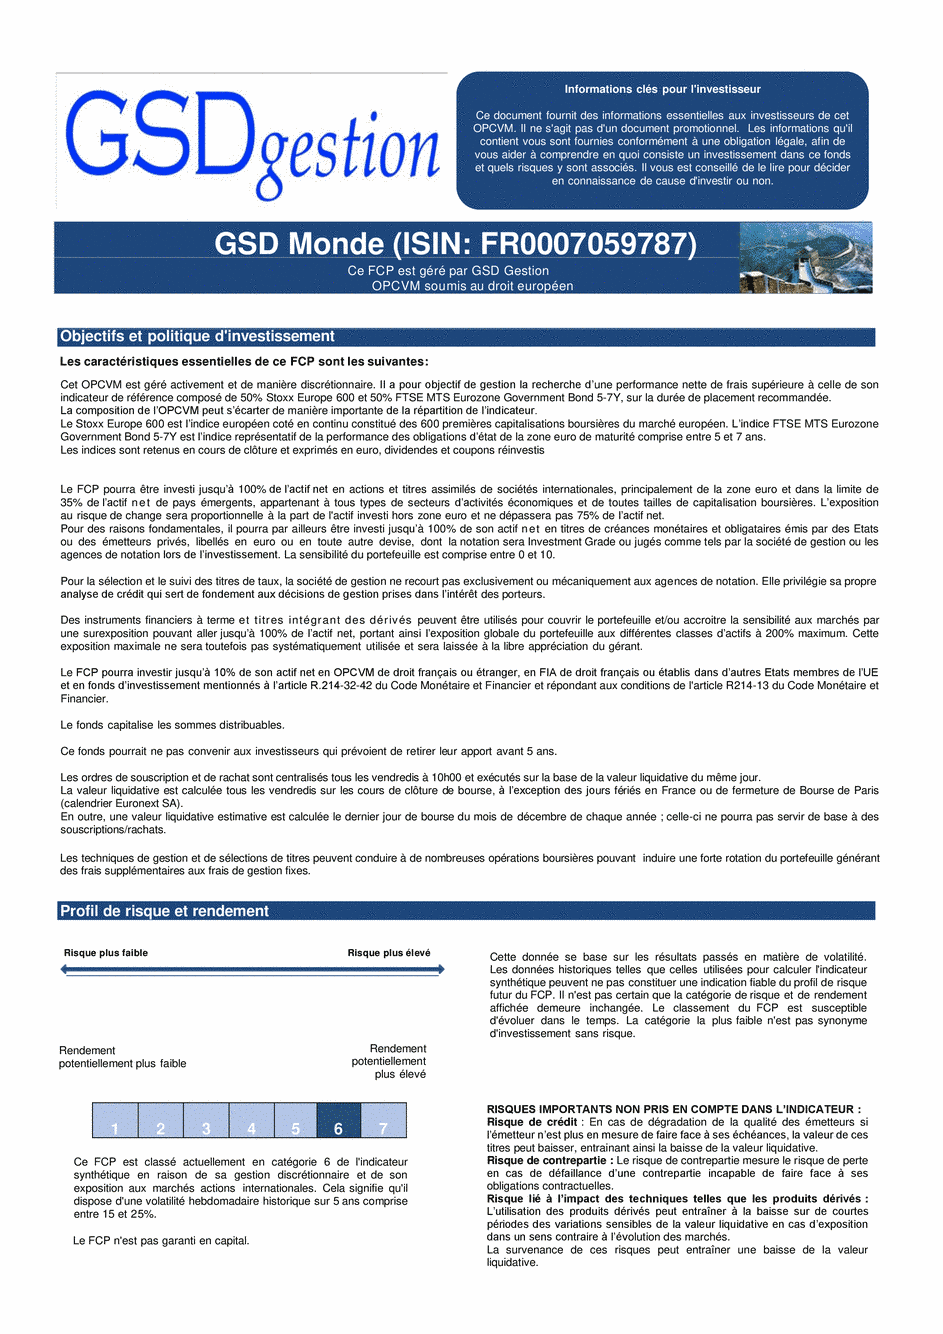 DICI-Prospectus GSD Monde - 04/01/2022 - Français